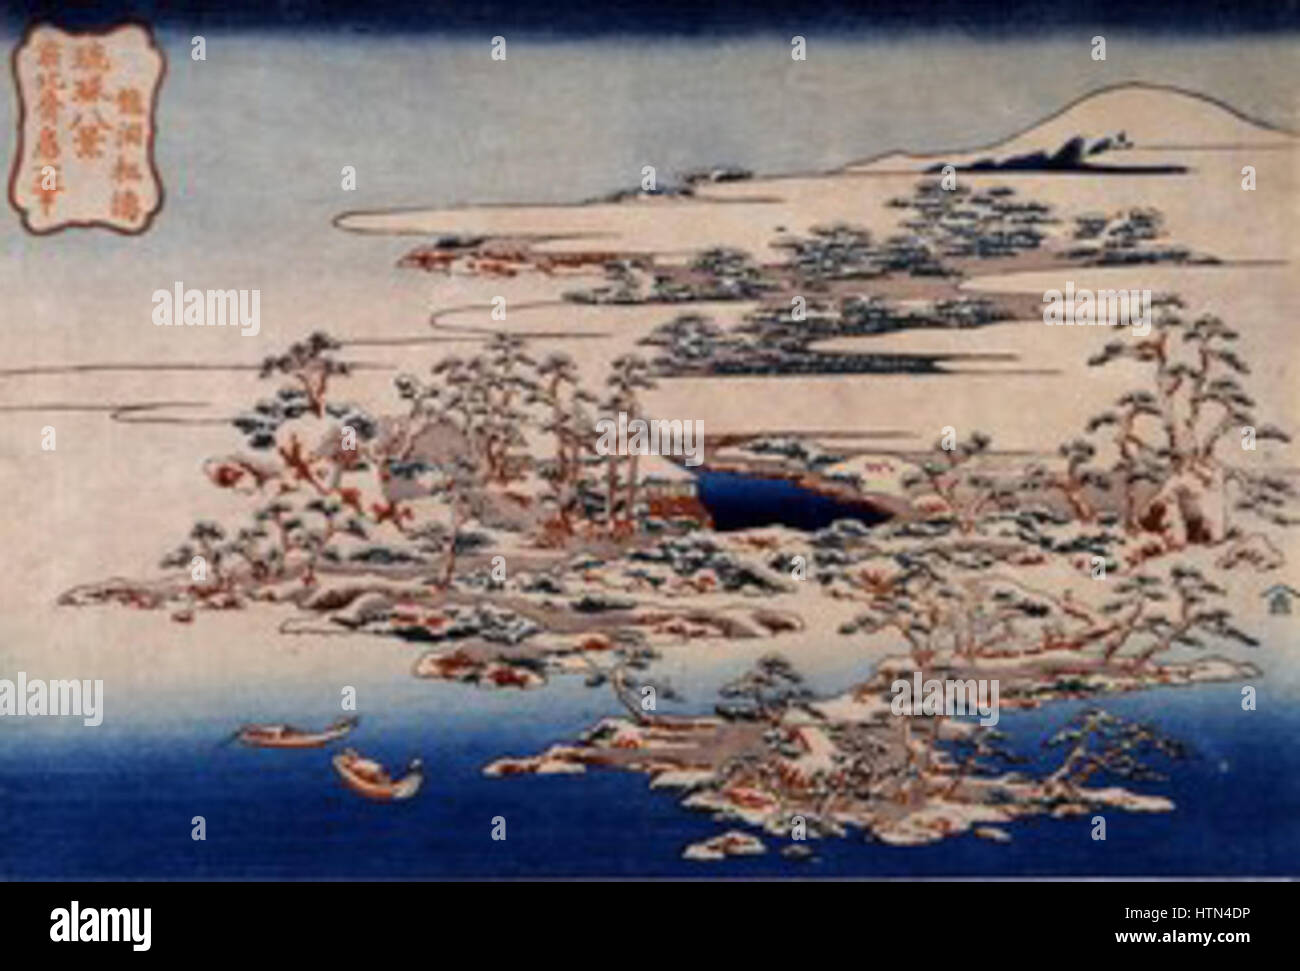 Otto viste delle isole Ryukyu da Hokusai (Urasoe Museo d'Arte) - pini e le onde a Ryudo Foto Stock